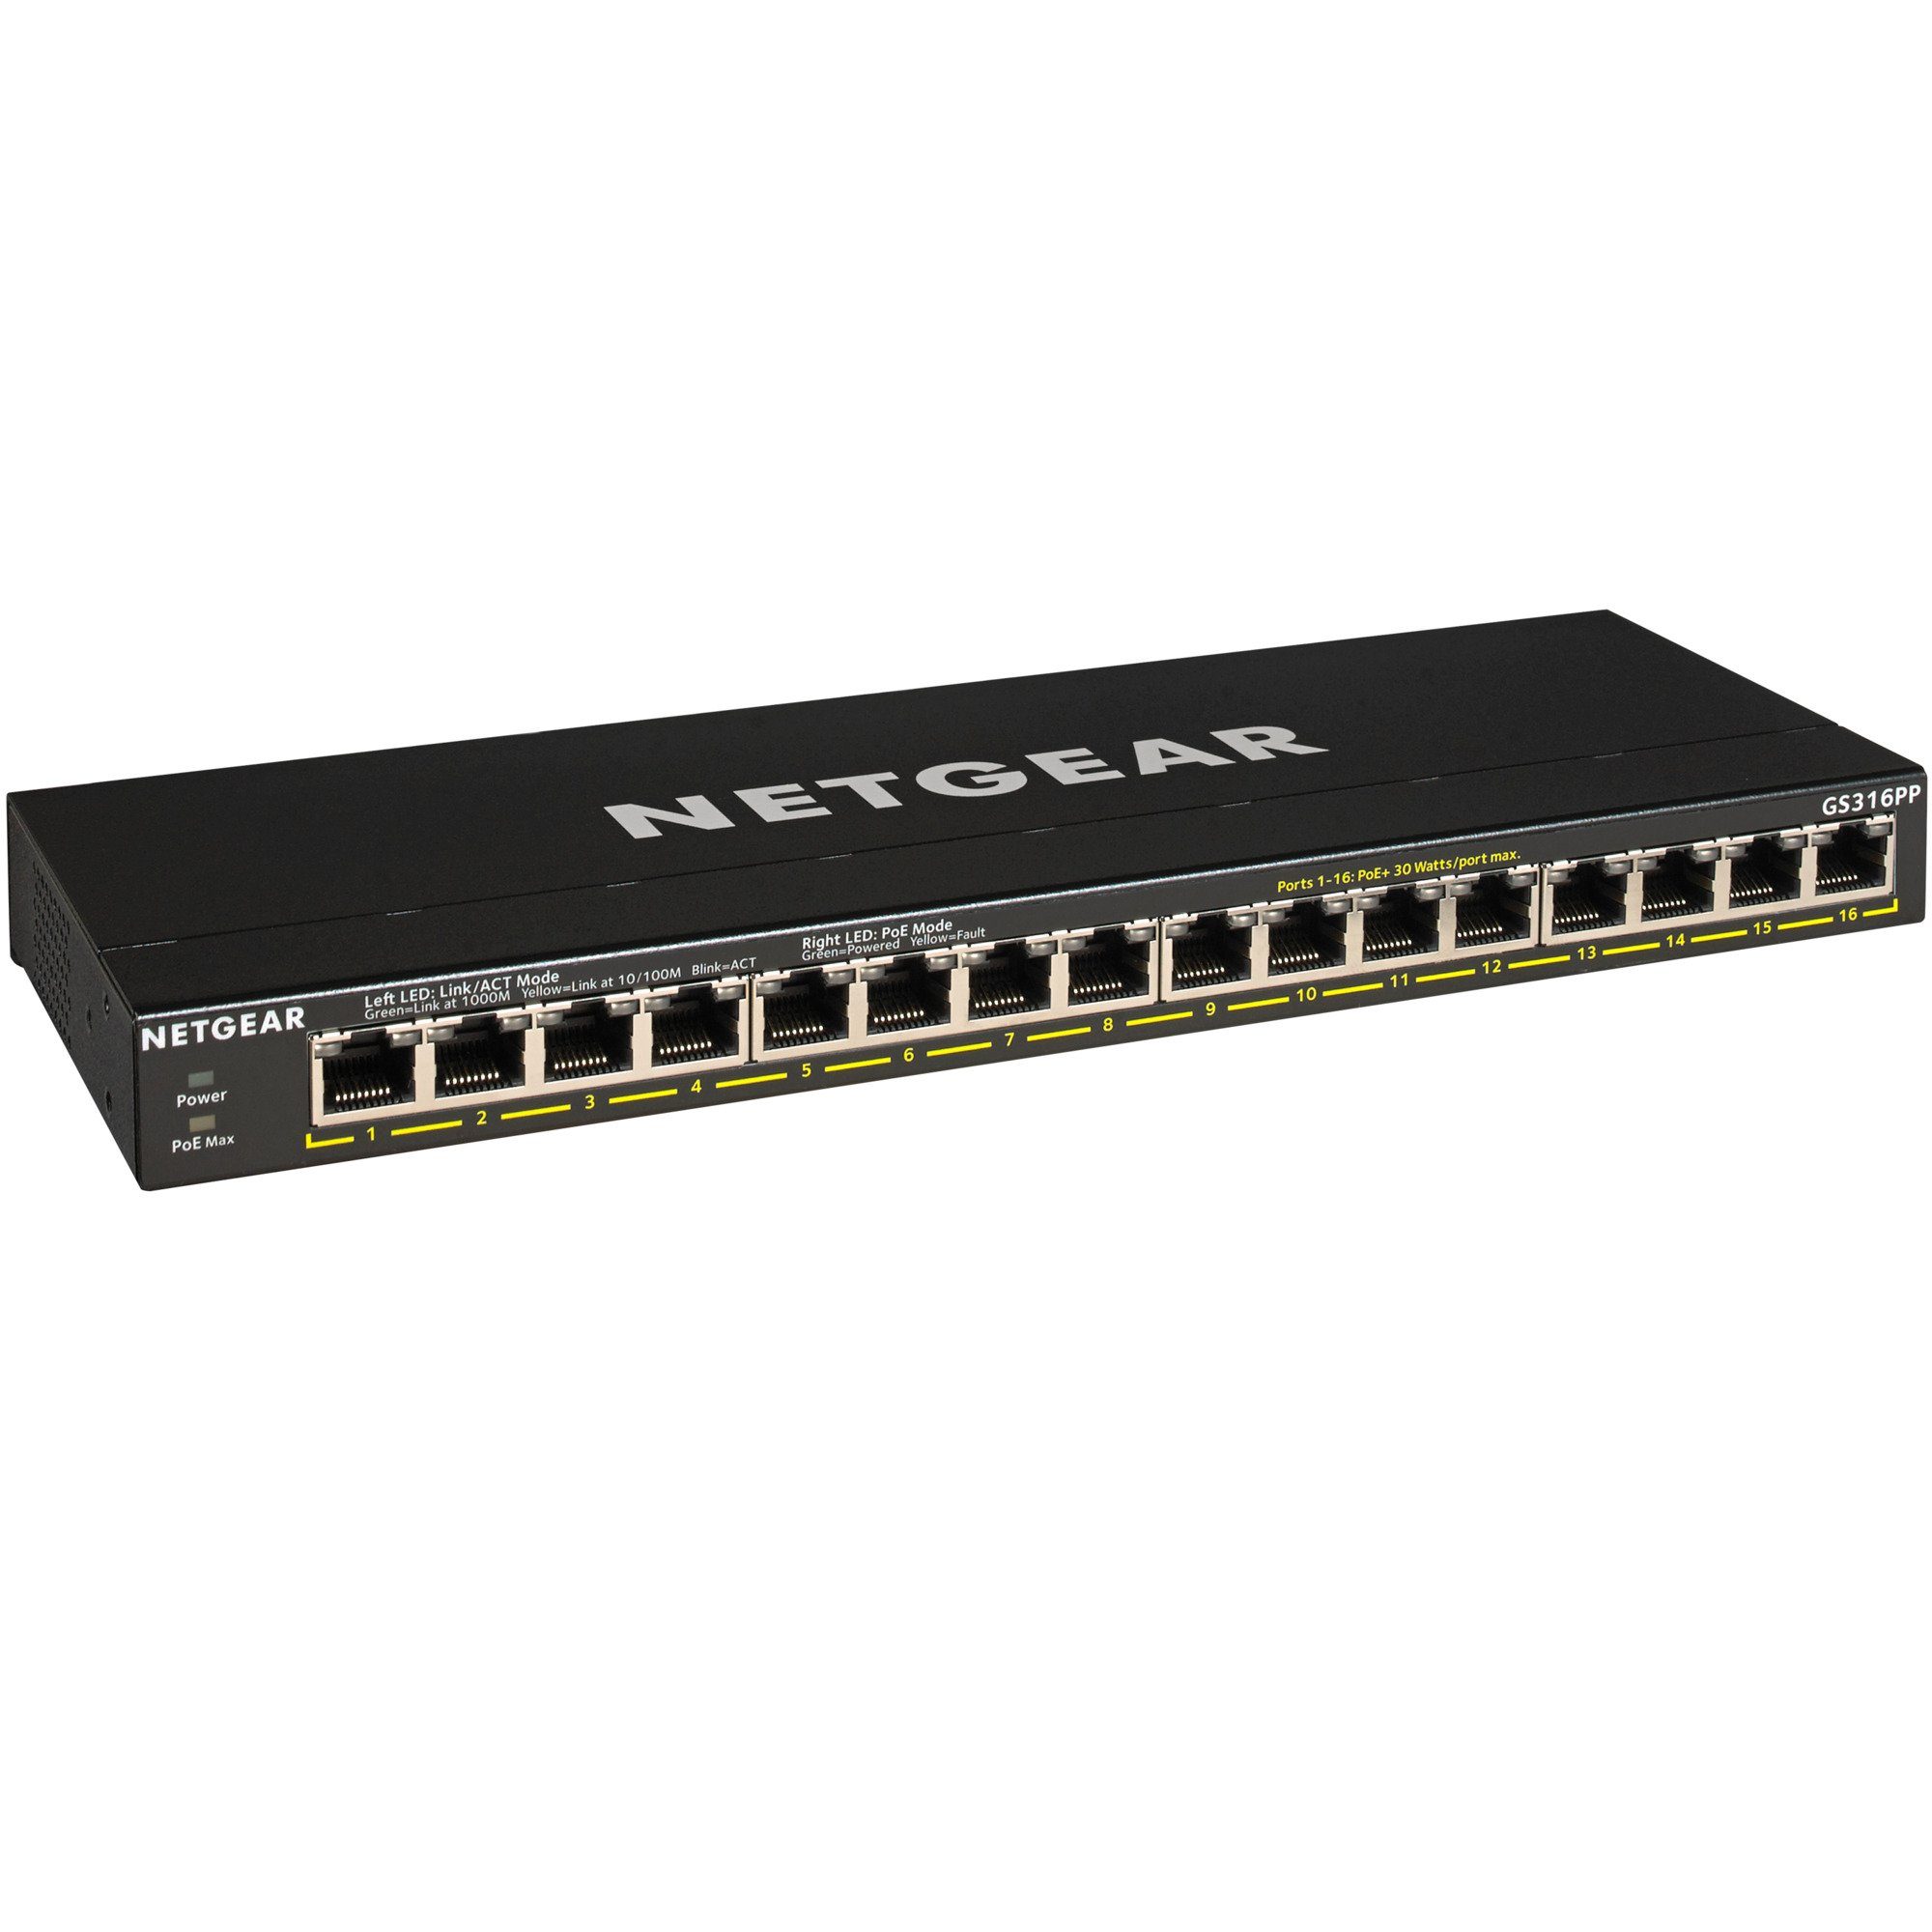 NETGEAR Netgear GS316PP, Switch Netzwerk-Switch